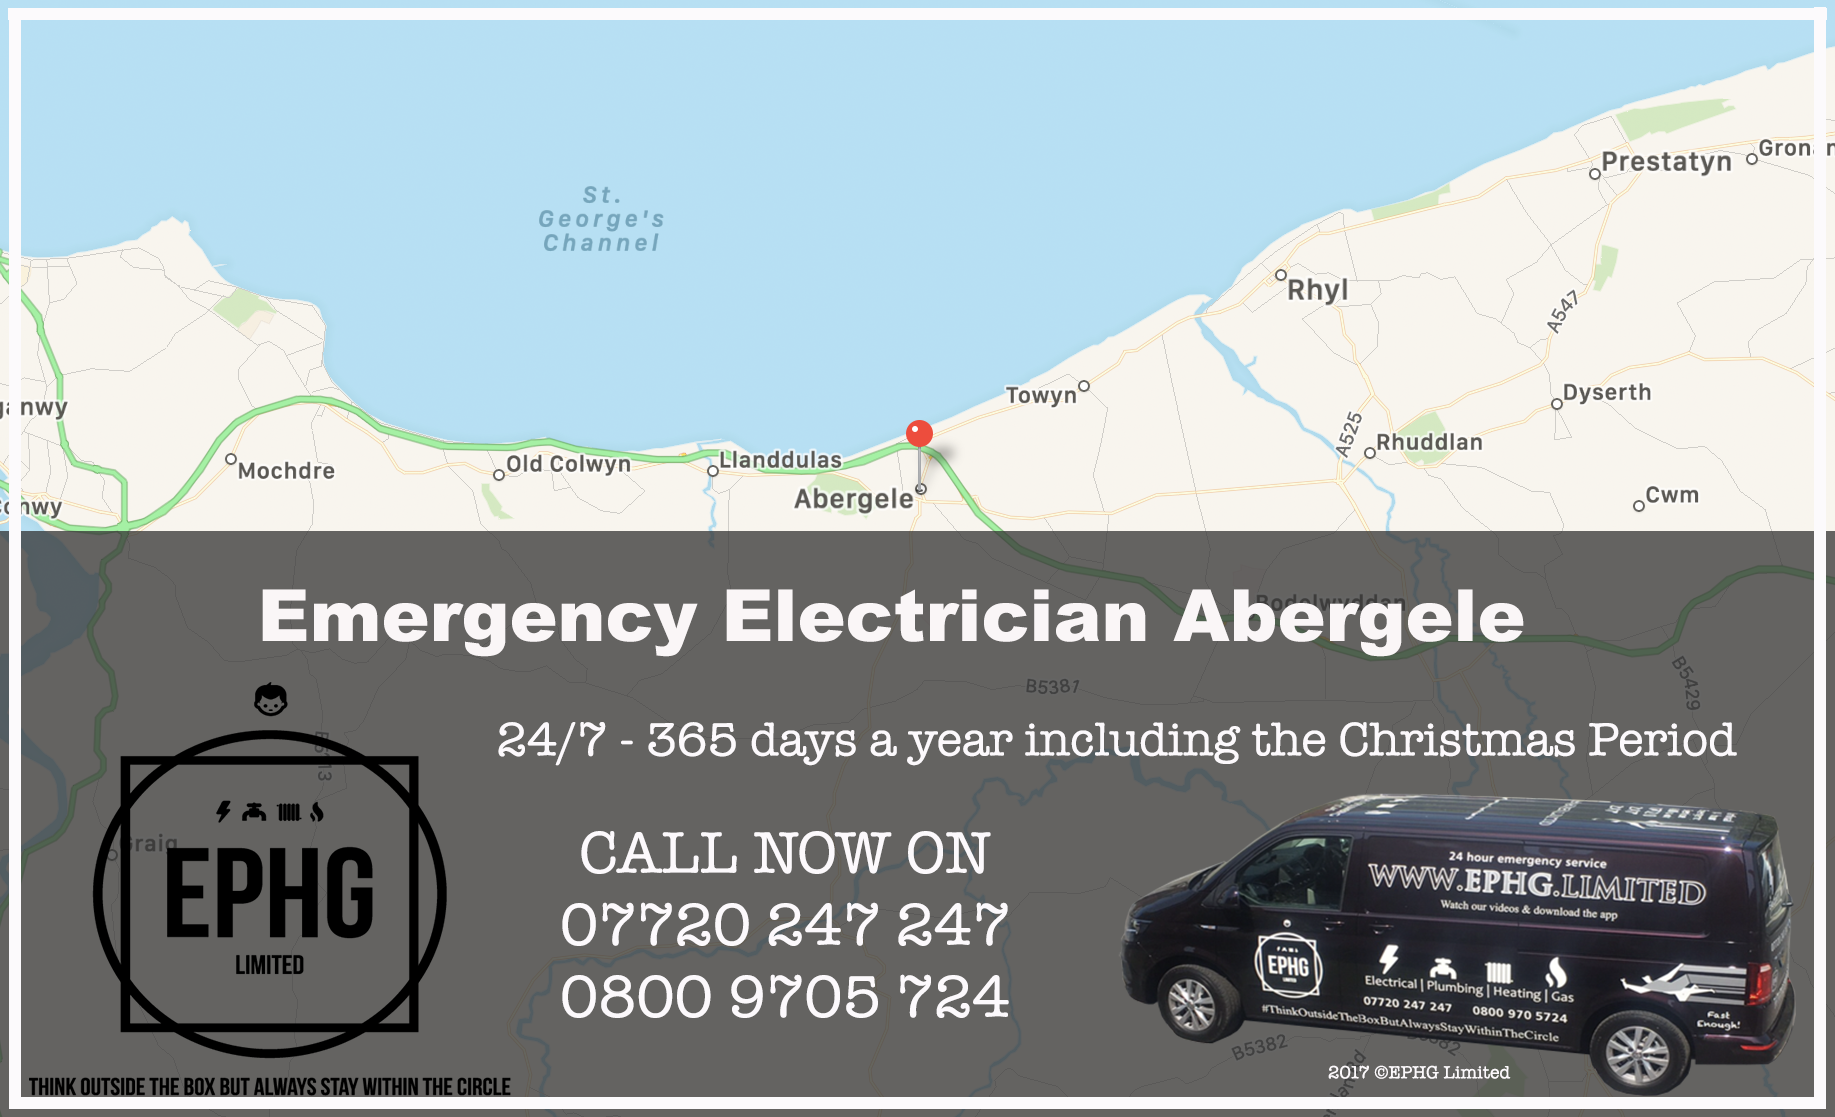 Emergency Electrician Abergele